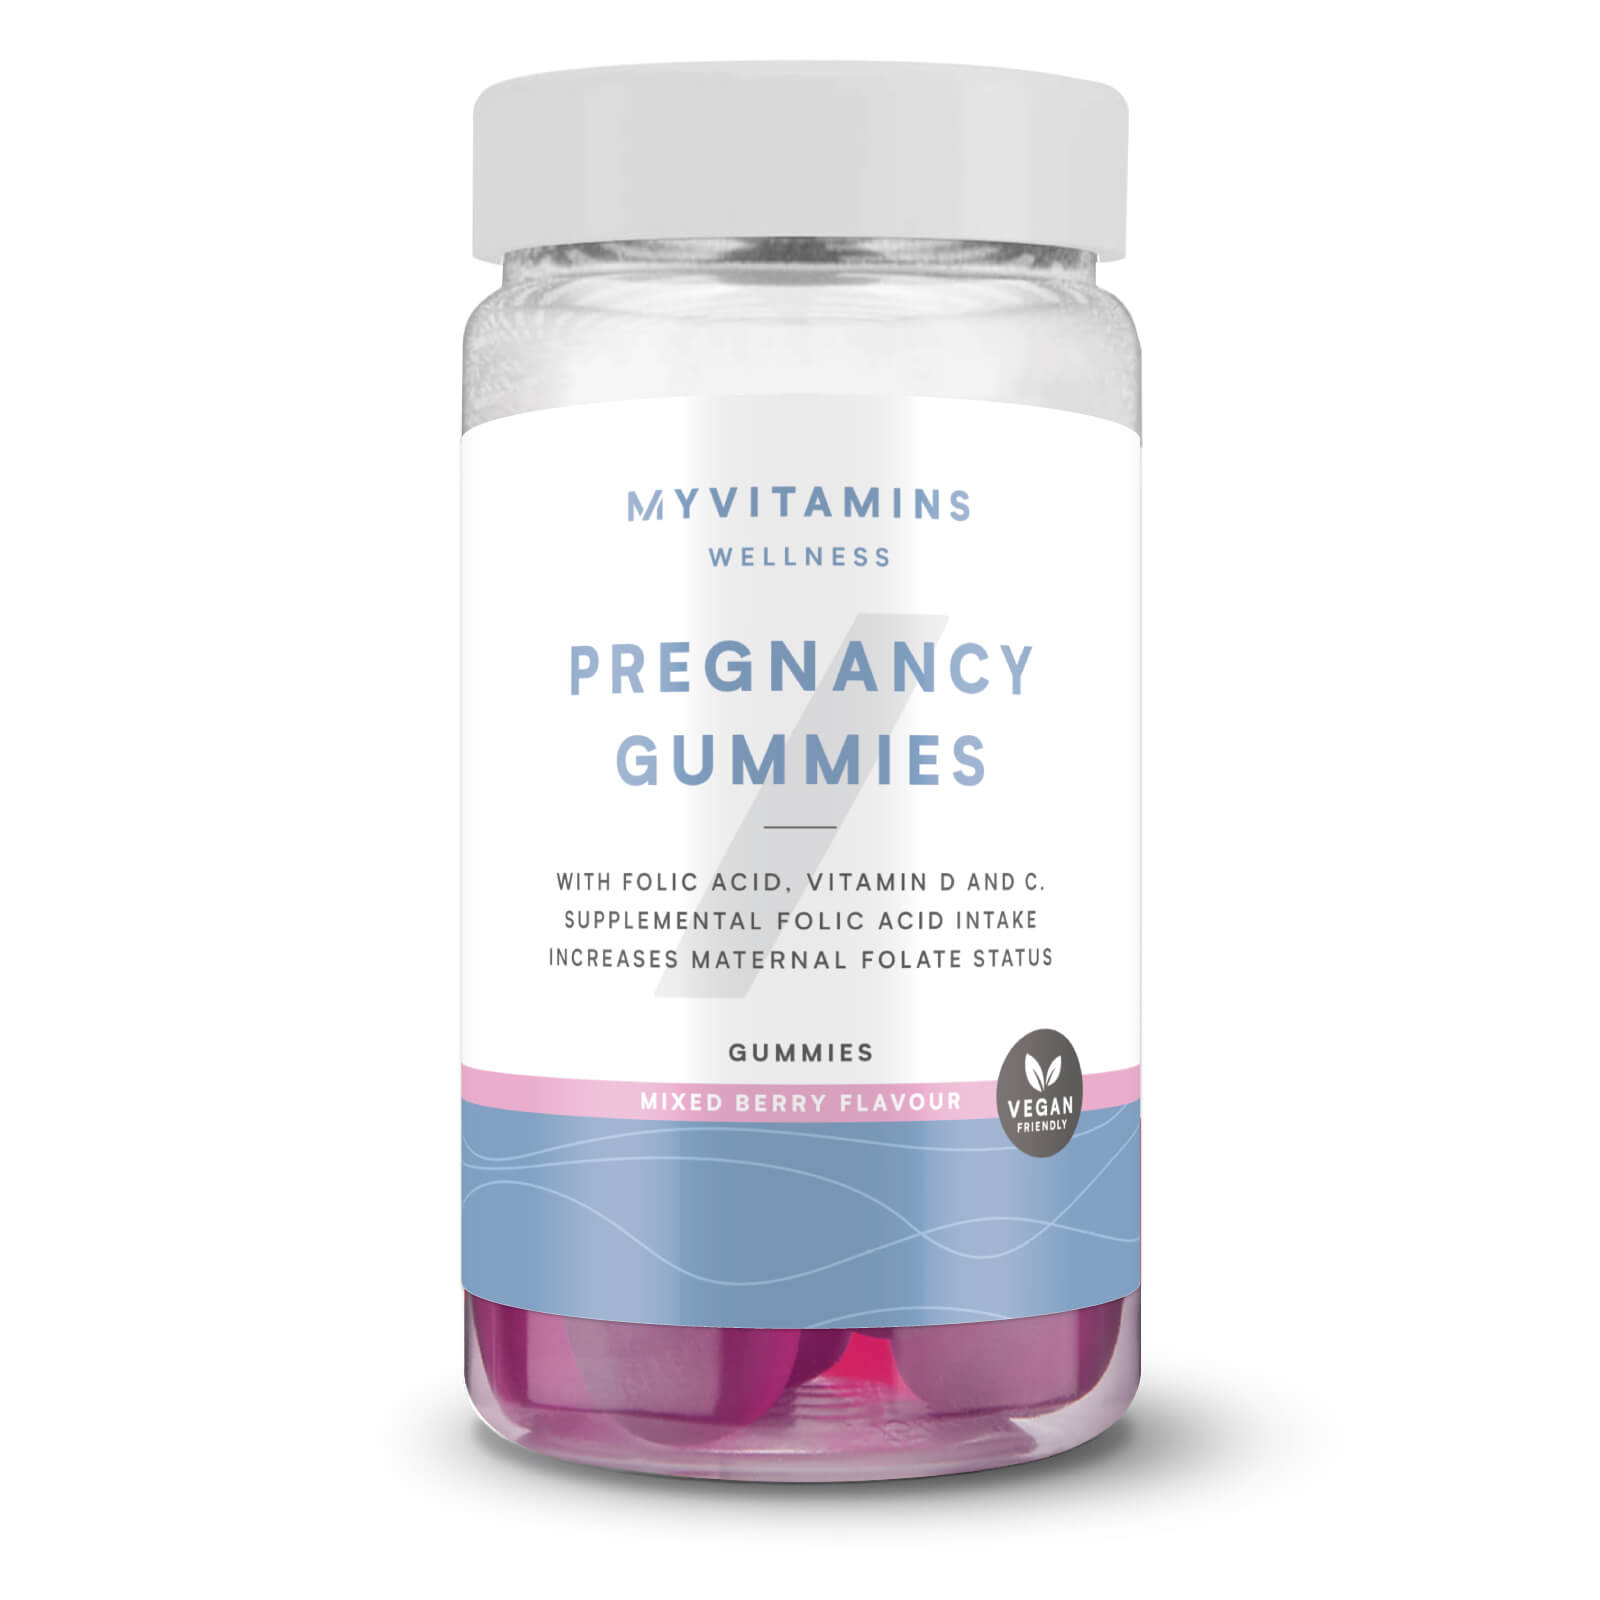 Myvitamins Pregnancy Gummies - 60gummies - Mixed Berry